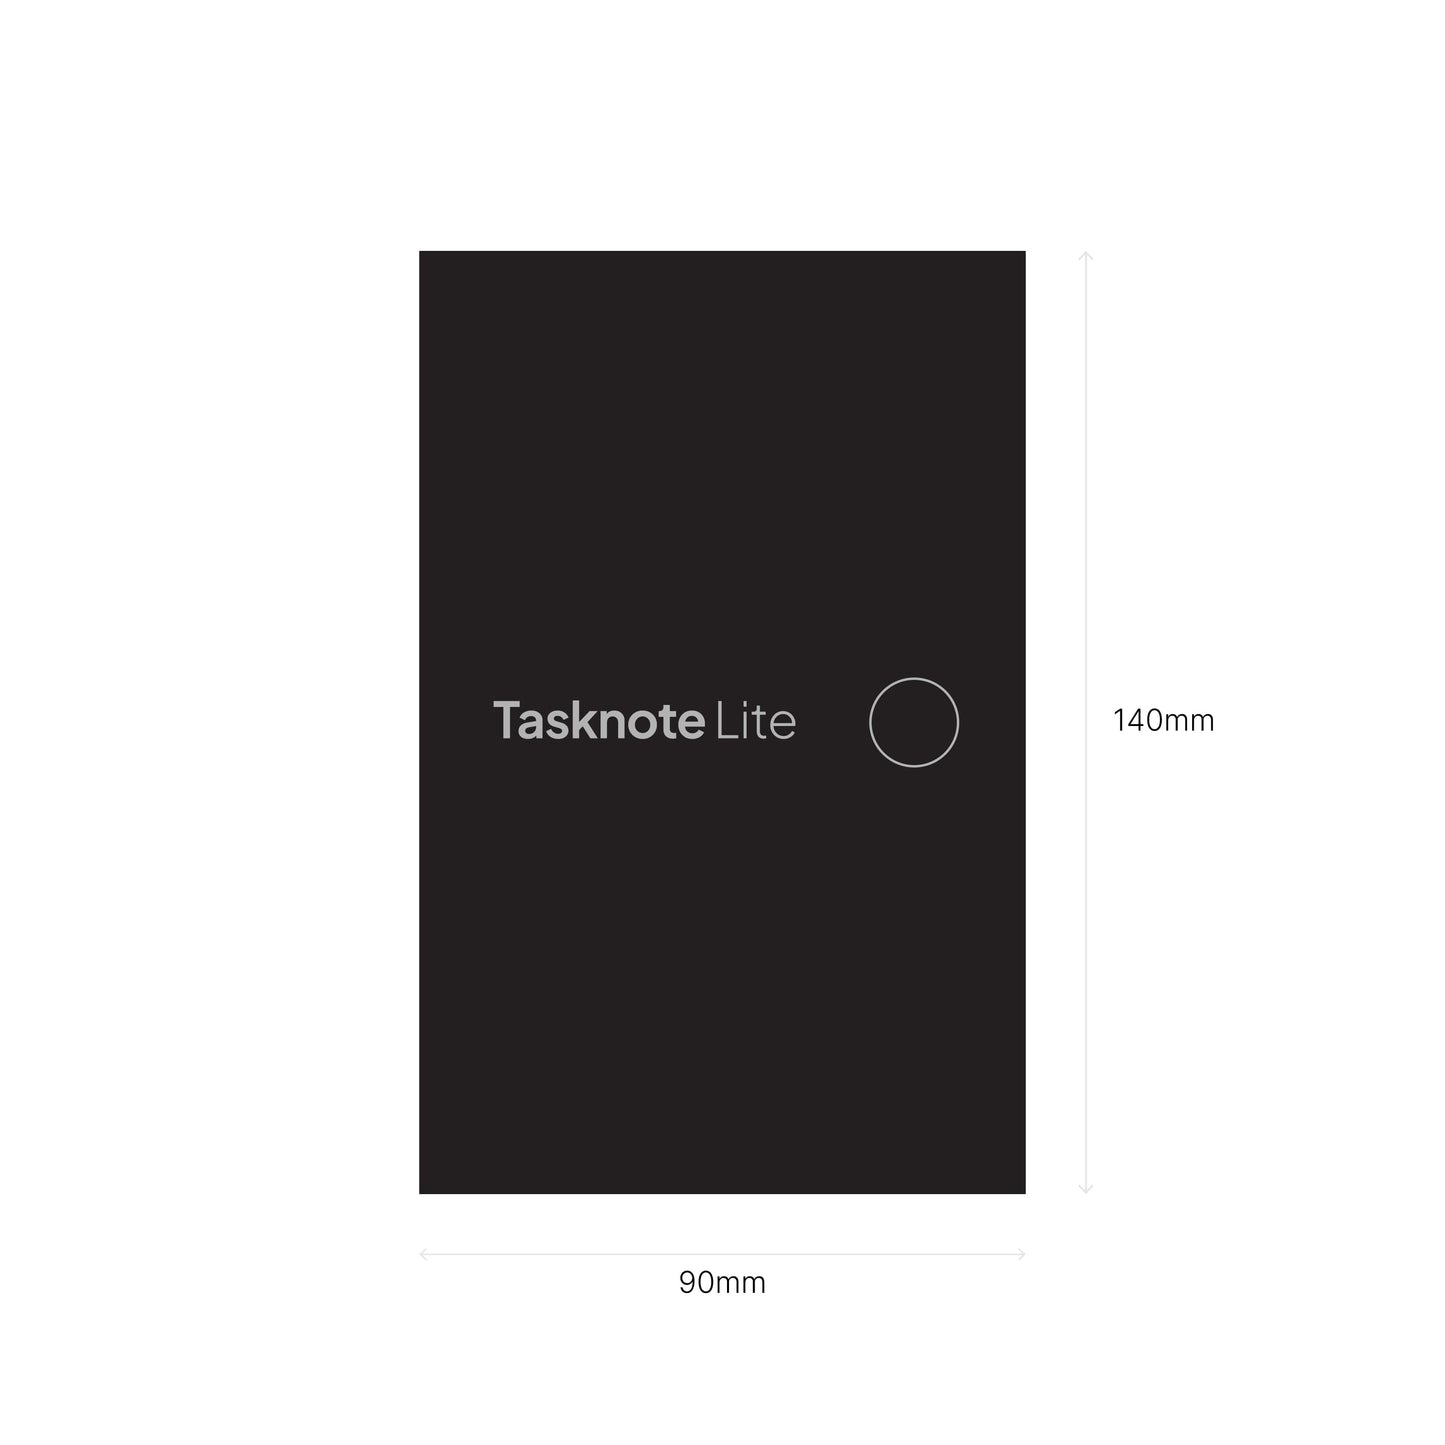 Tasknote Lite